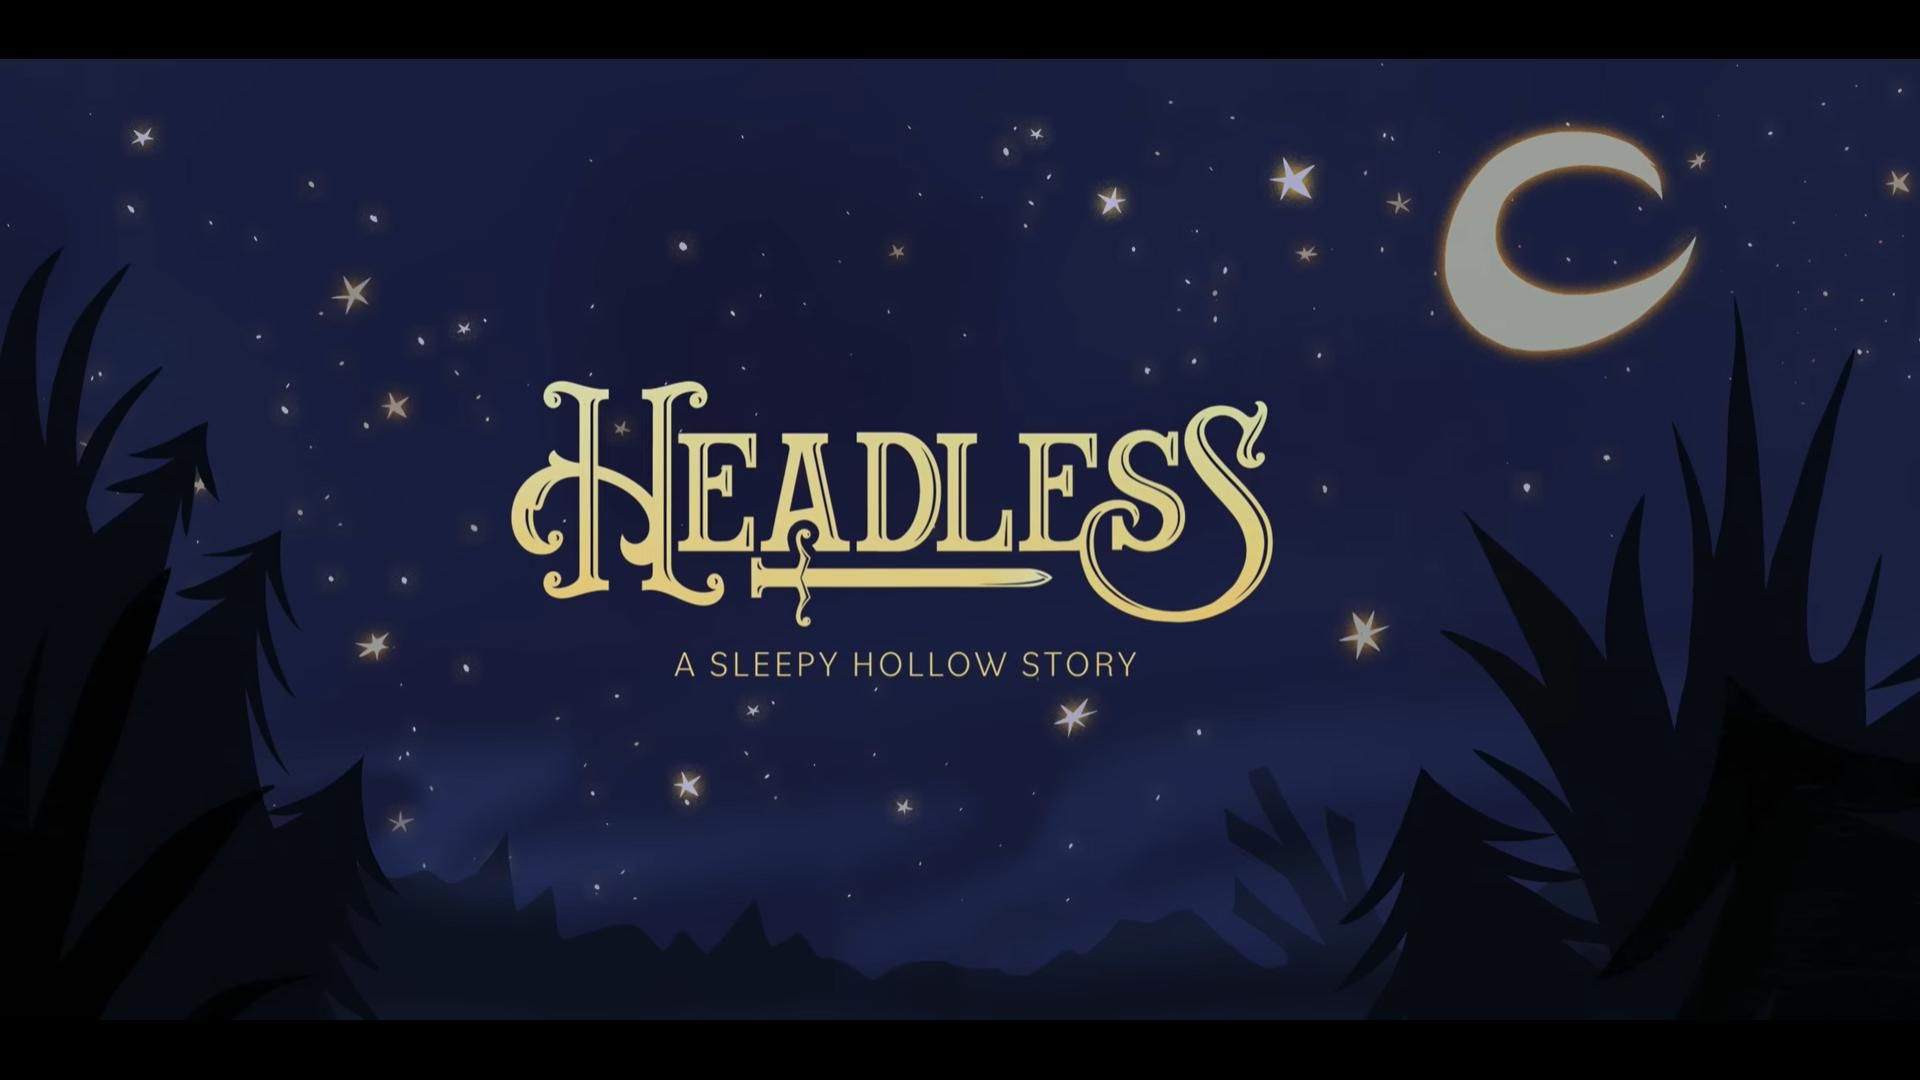 Headless: A Sleepy Hollow Story background